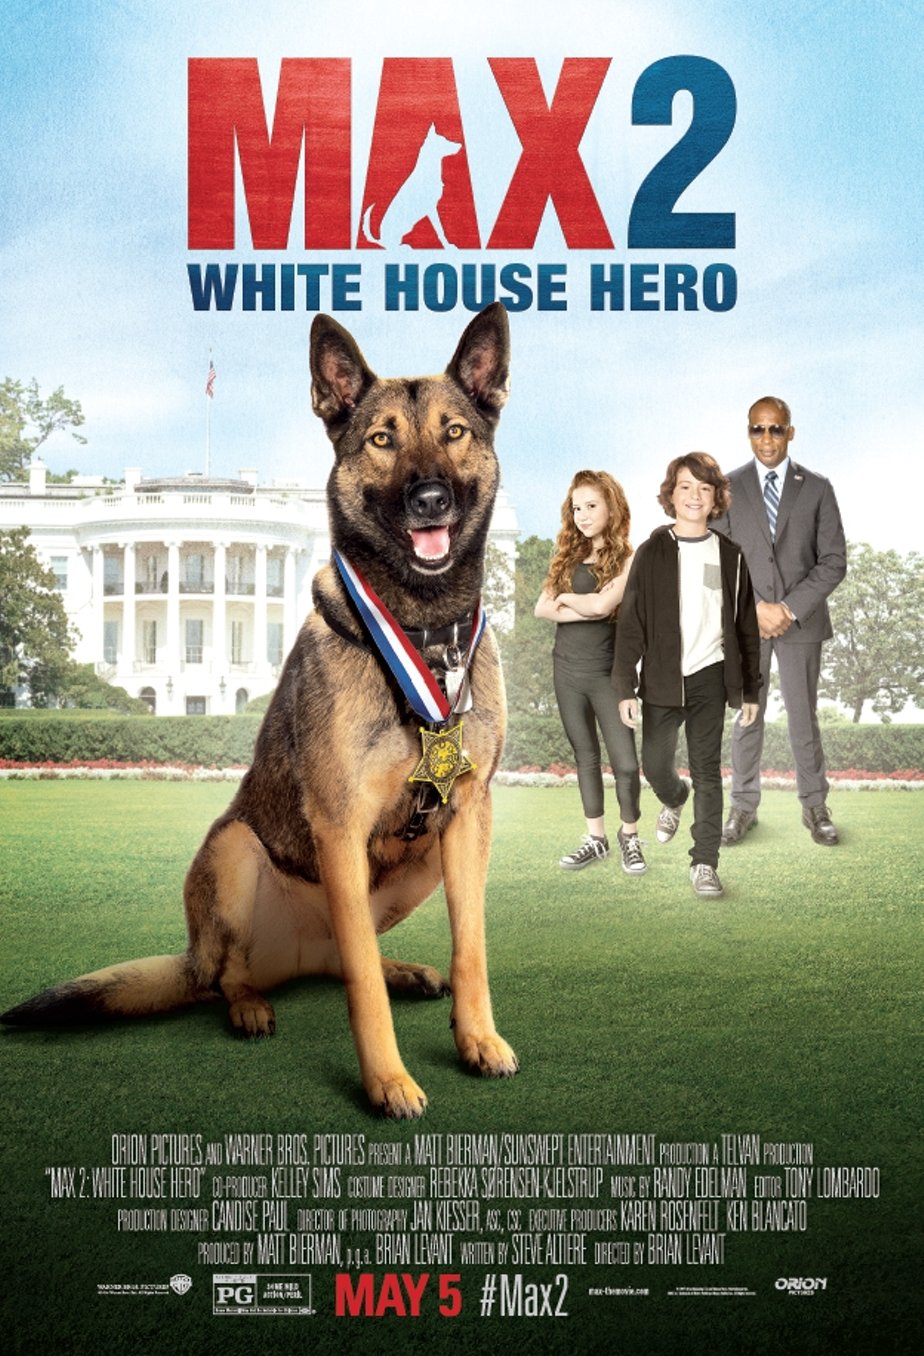 MAX 2 WHITE HOUSE HERO (2017) แม๊กซ์ 2 เพื่อนรักสี่ขา ฮีโร่แห่งทำเนียบขาว - ดูหนังออนไลน